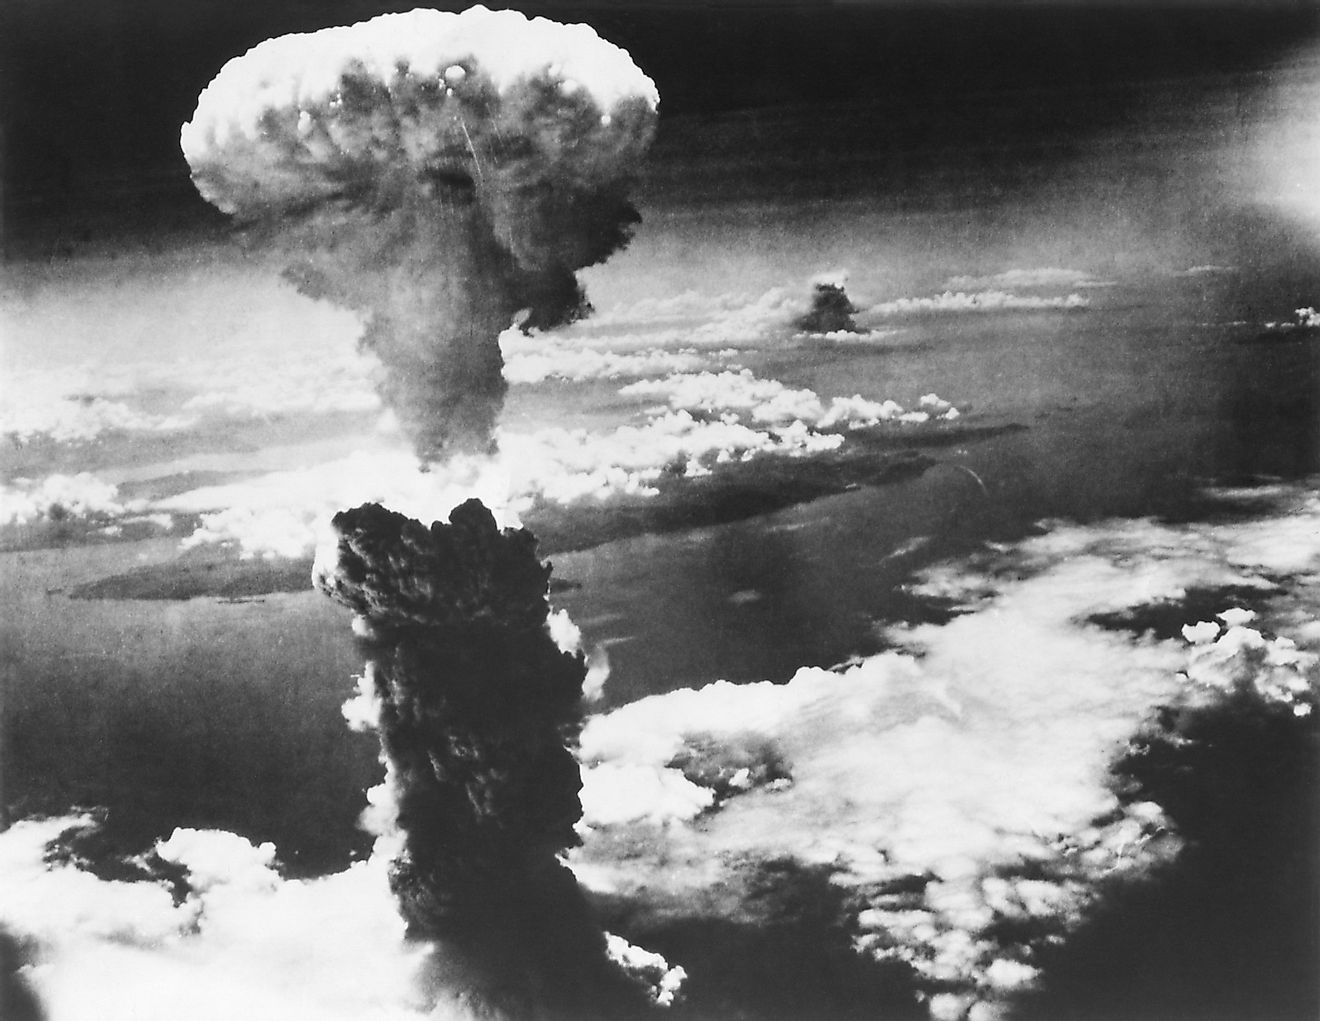 Mushroom Cloud of Atom Bomb exploded over Nagasaki, Japan, on August 9, 1945. World War 2. Image credit: Everett Collection/Shutterstock.com